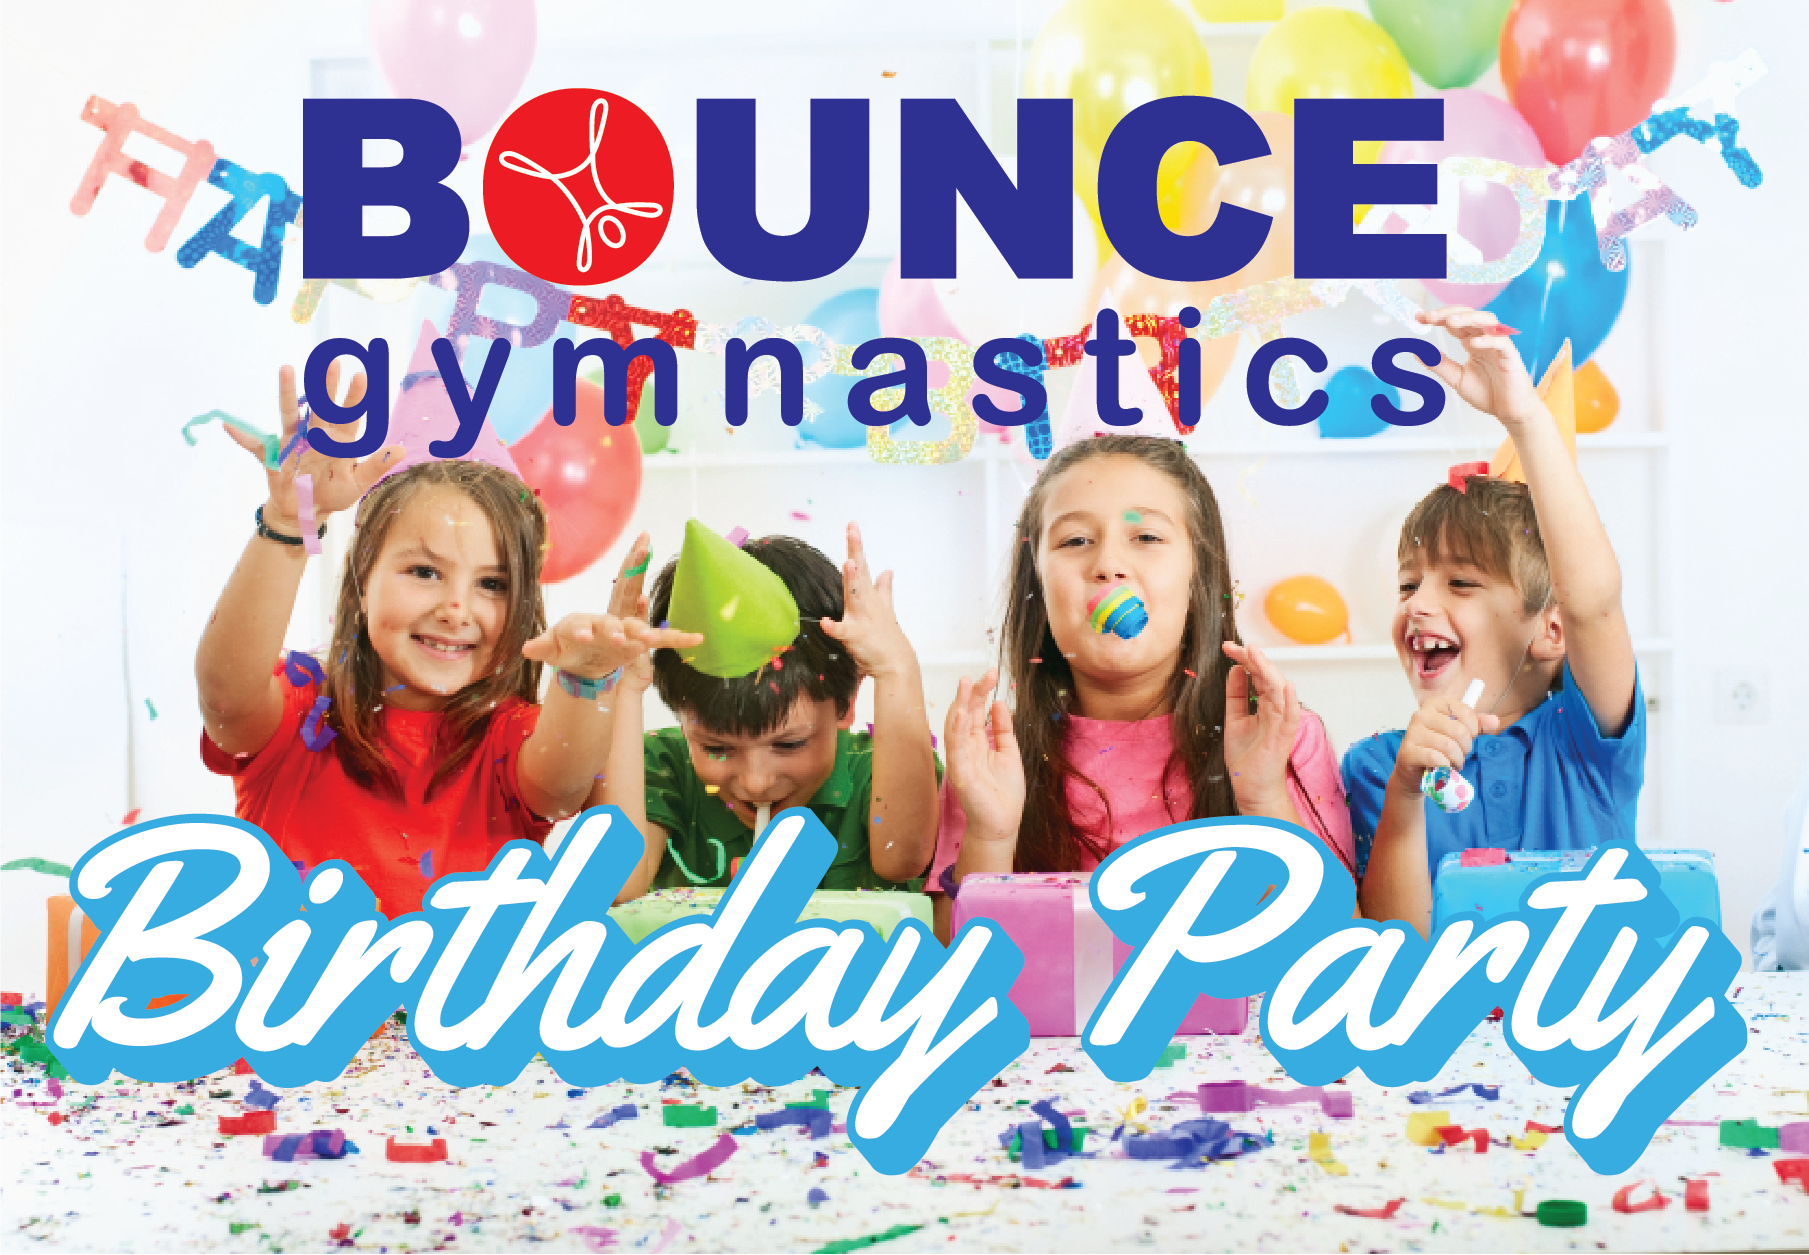 Bounce, gymnastics birthday party